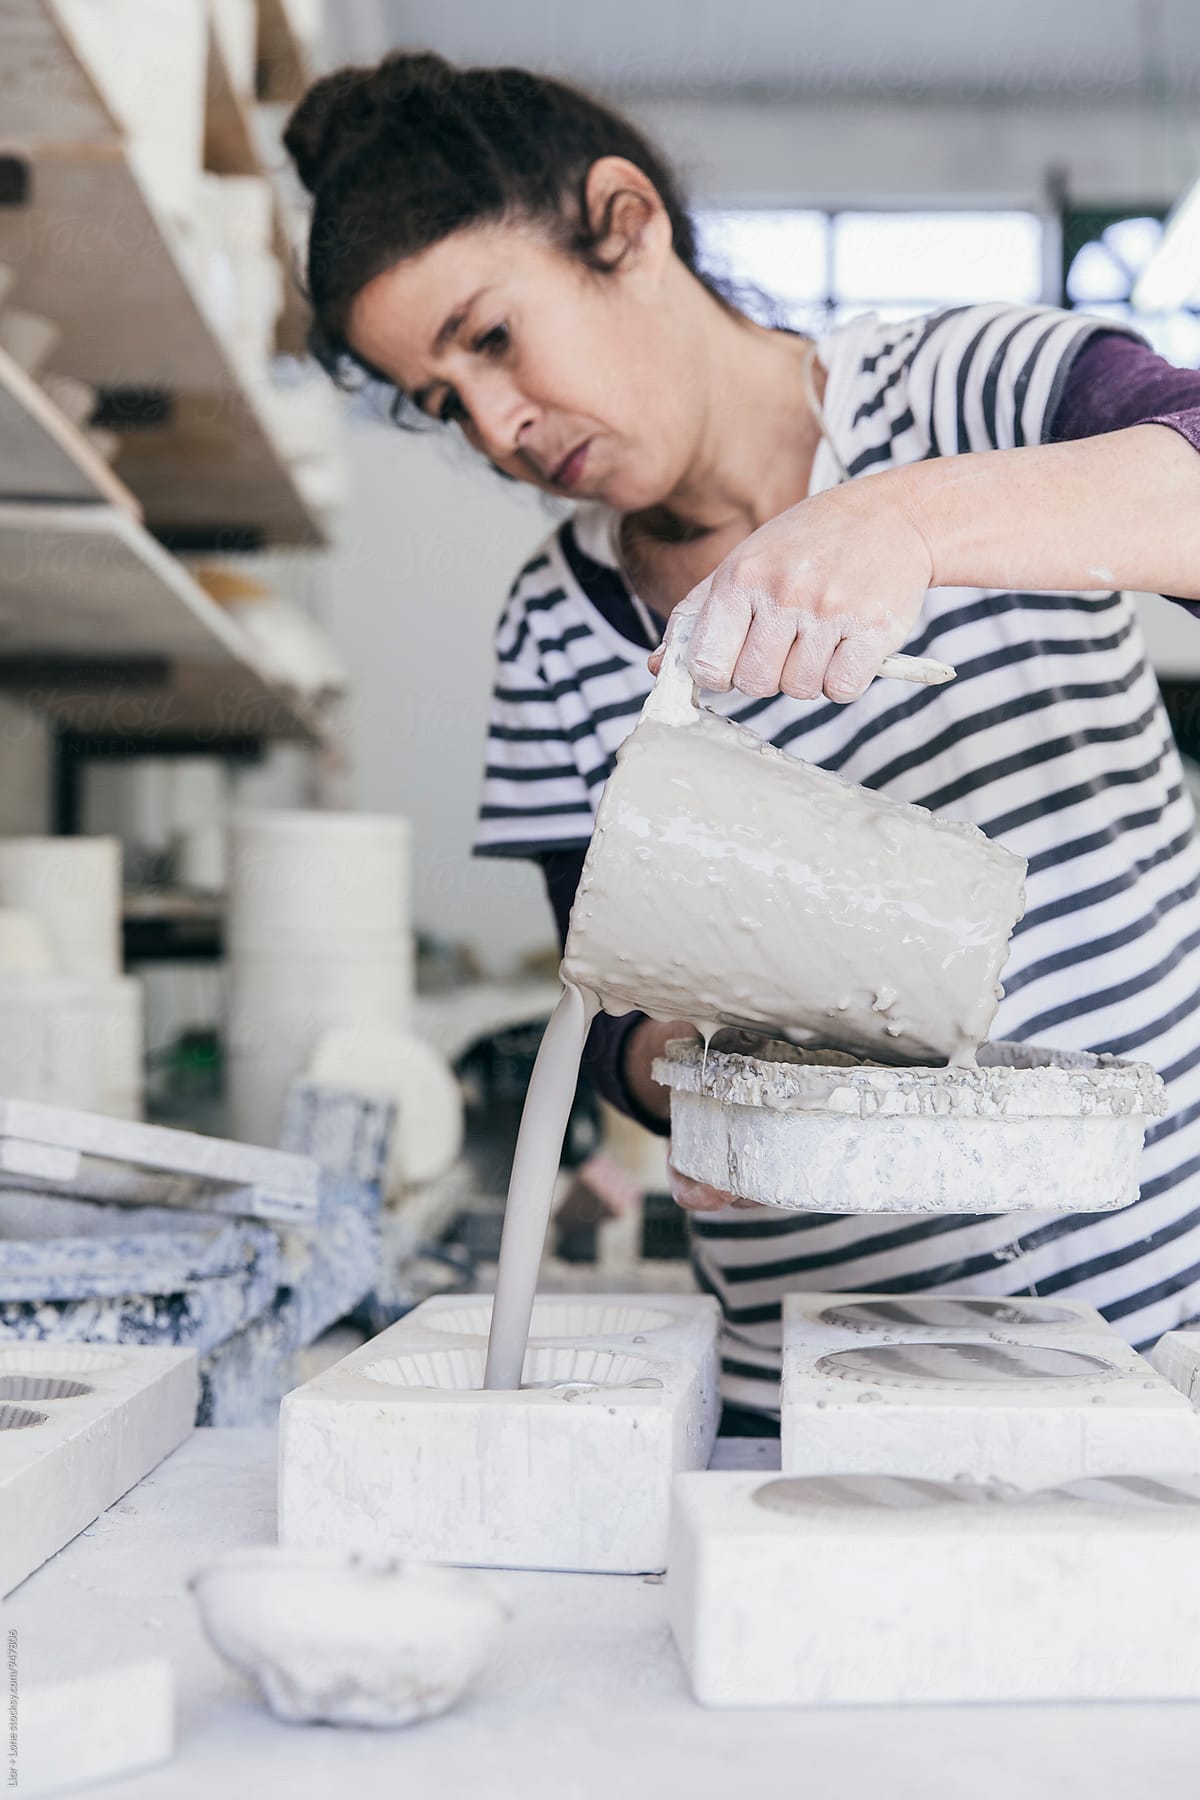 Female ceramic artist pouring wet slip into ceramic moulds